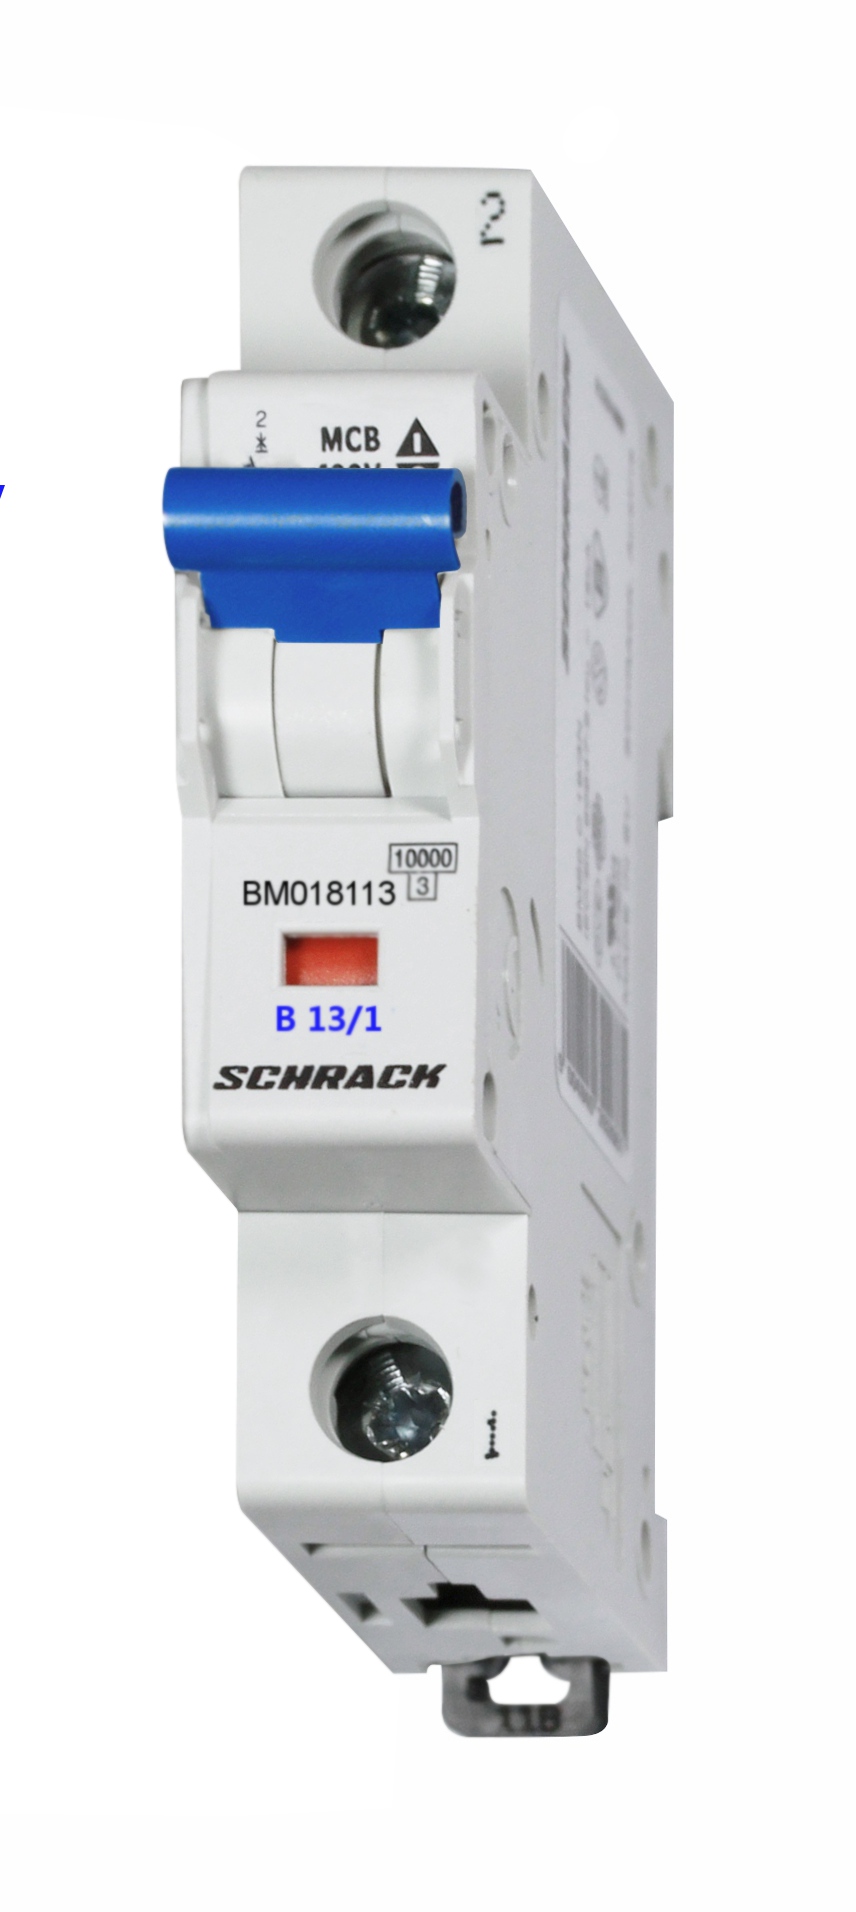 BM018113-- Schrack Technik